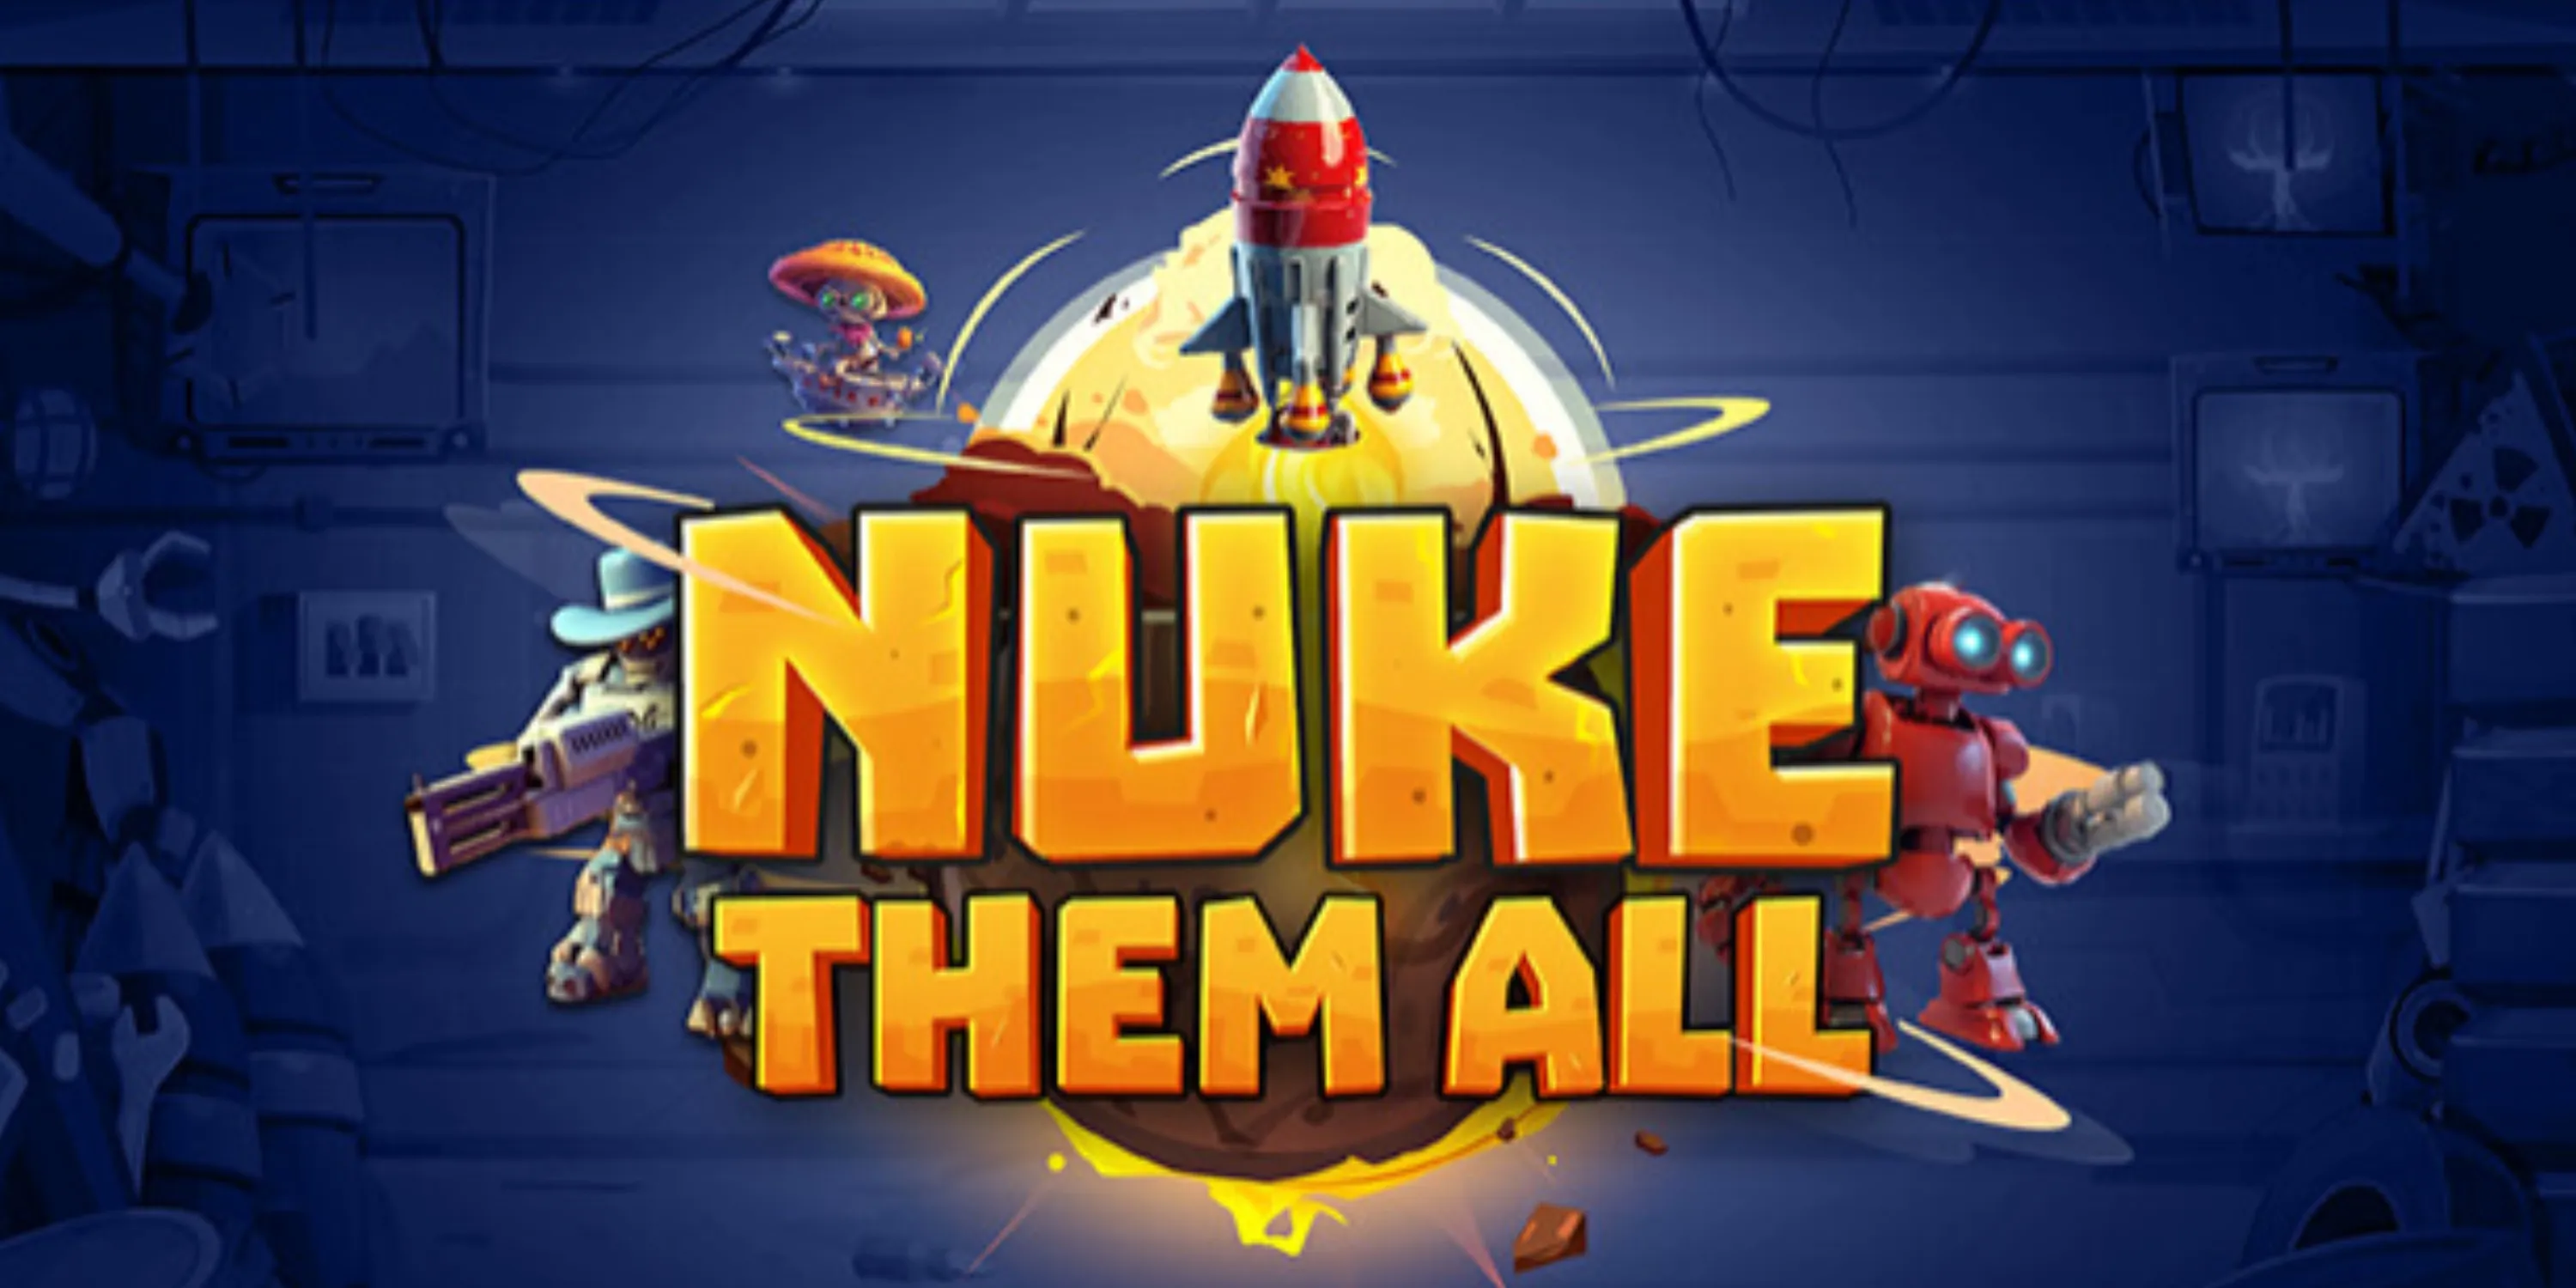 Écran du logo de Nuke Them All